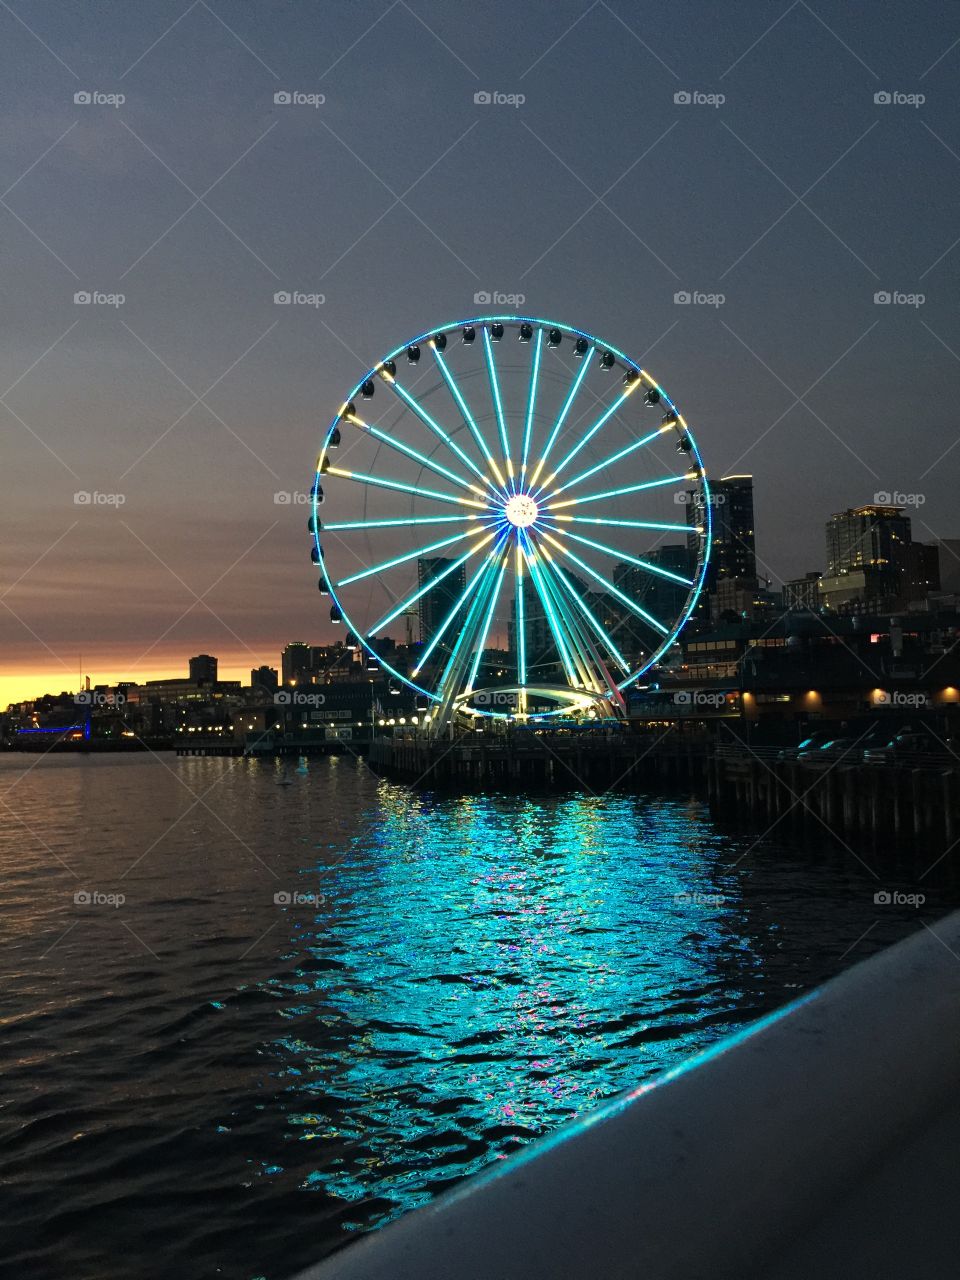 The Great Wheel at night. 
Seattle, Washington